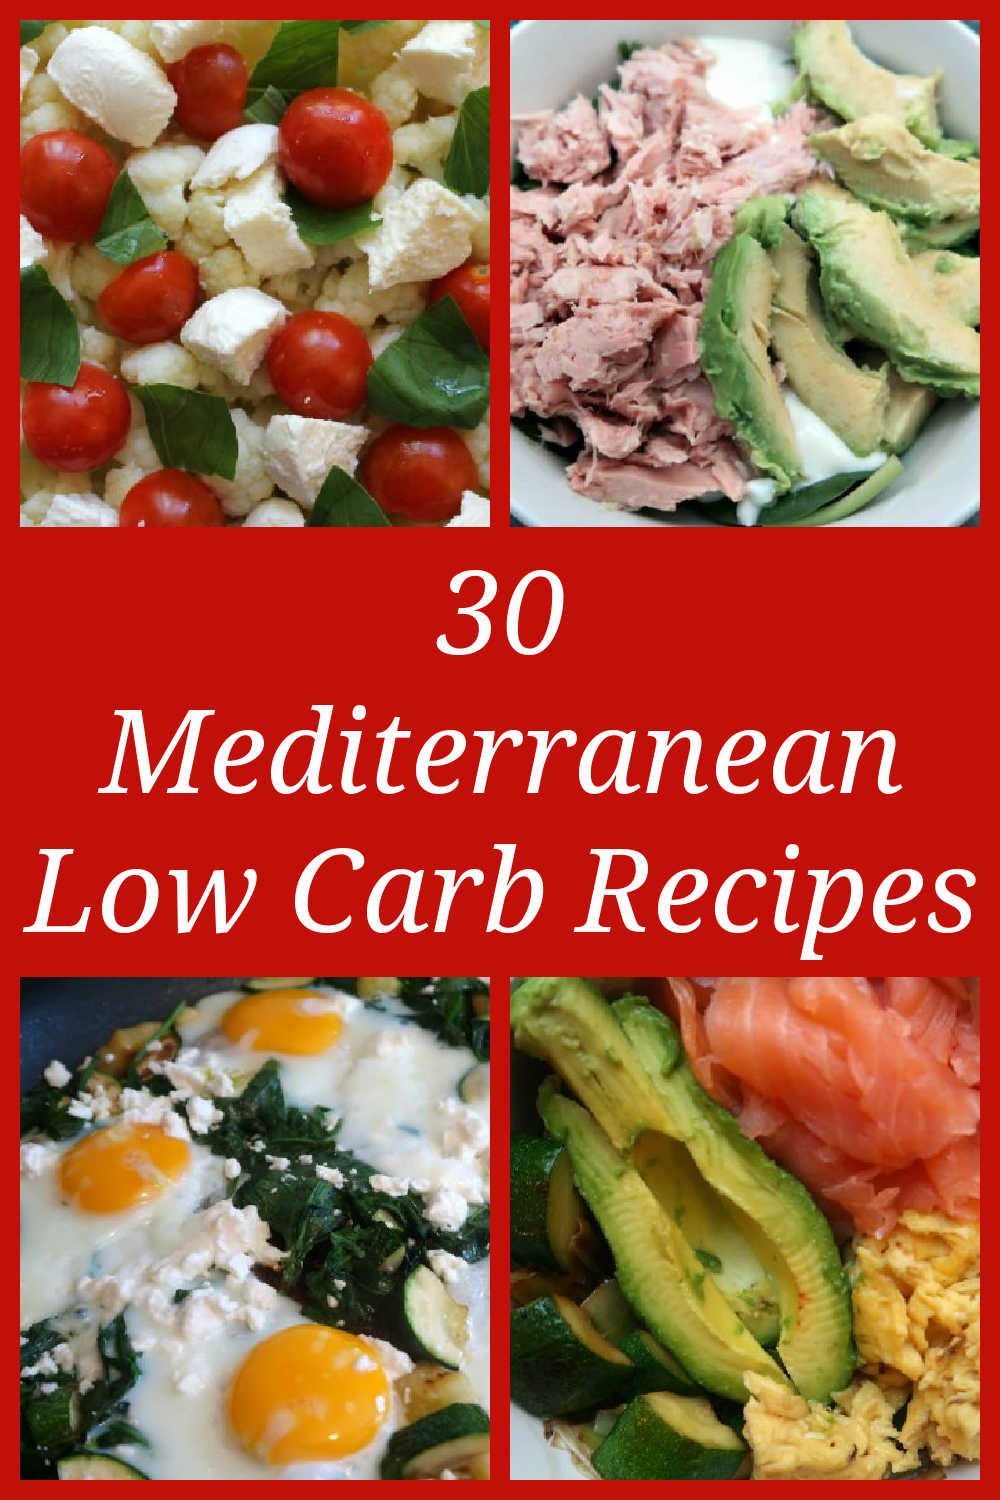 Mediterranean Low Carb Recipes - 30 Easy Keto and Mediterranean Diet Friendly Healthy Meal Plan Ideas.